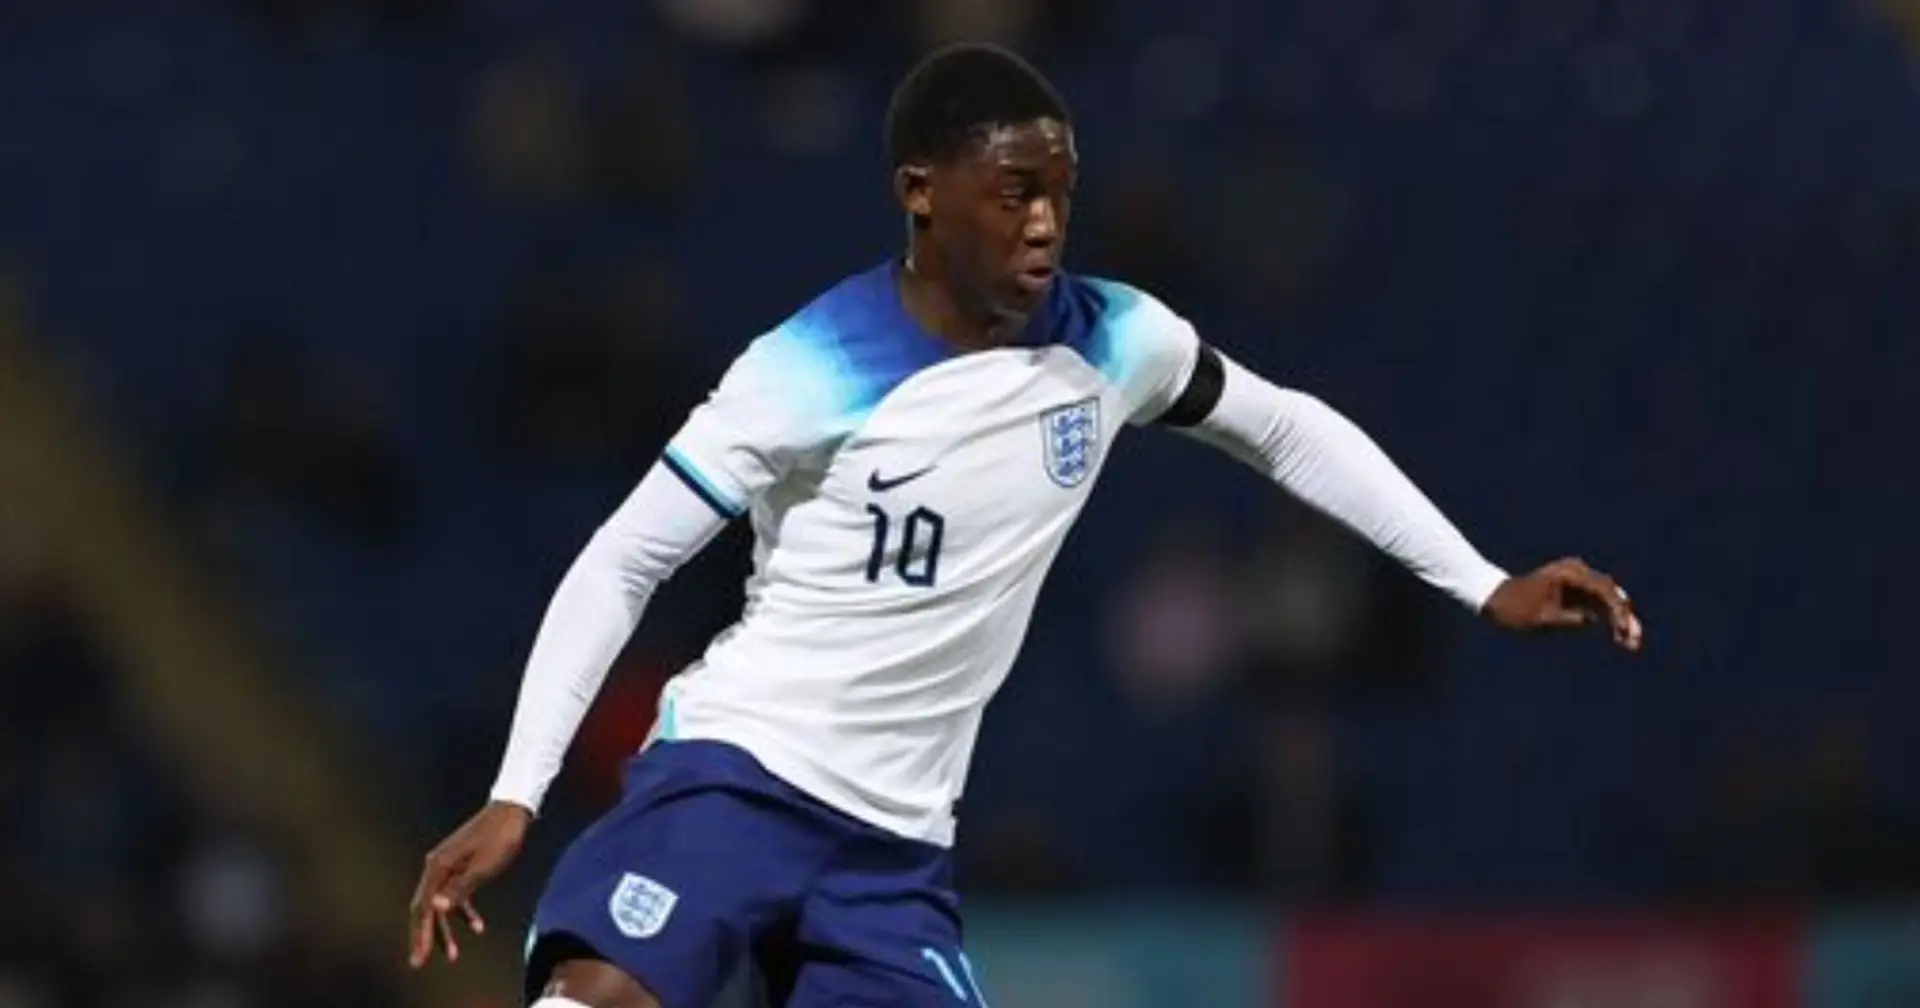 England or Ghana? Kobbie Mainoo 'keeping his international options open'